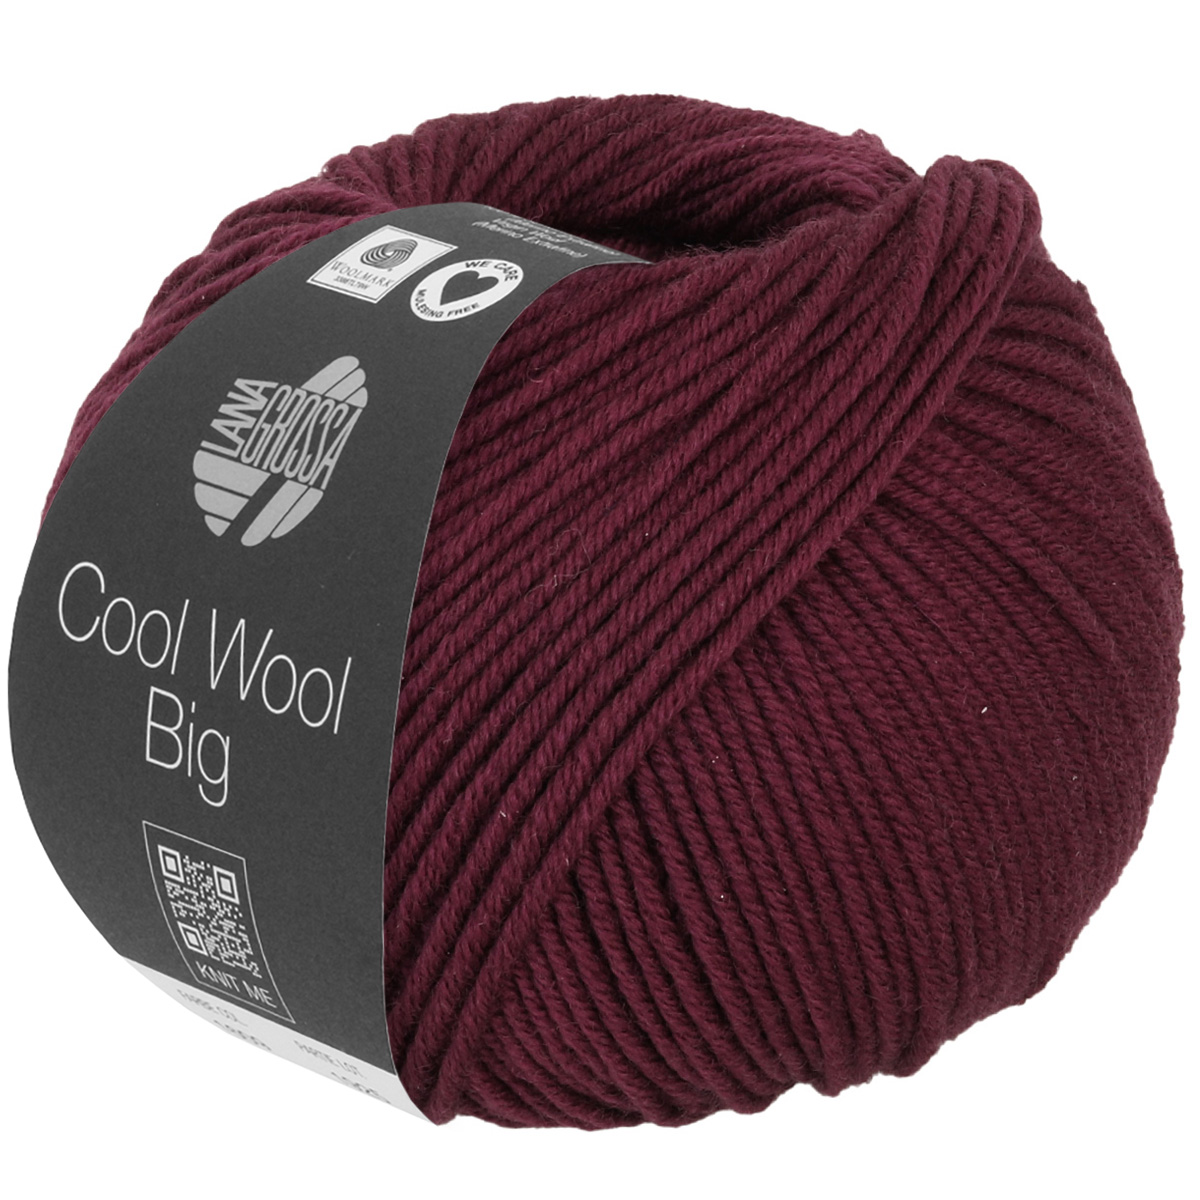 Lana Grossa Cool Wool Big kleur 1014